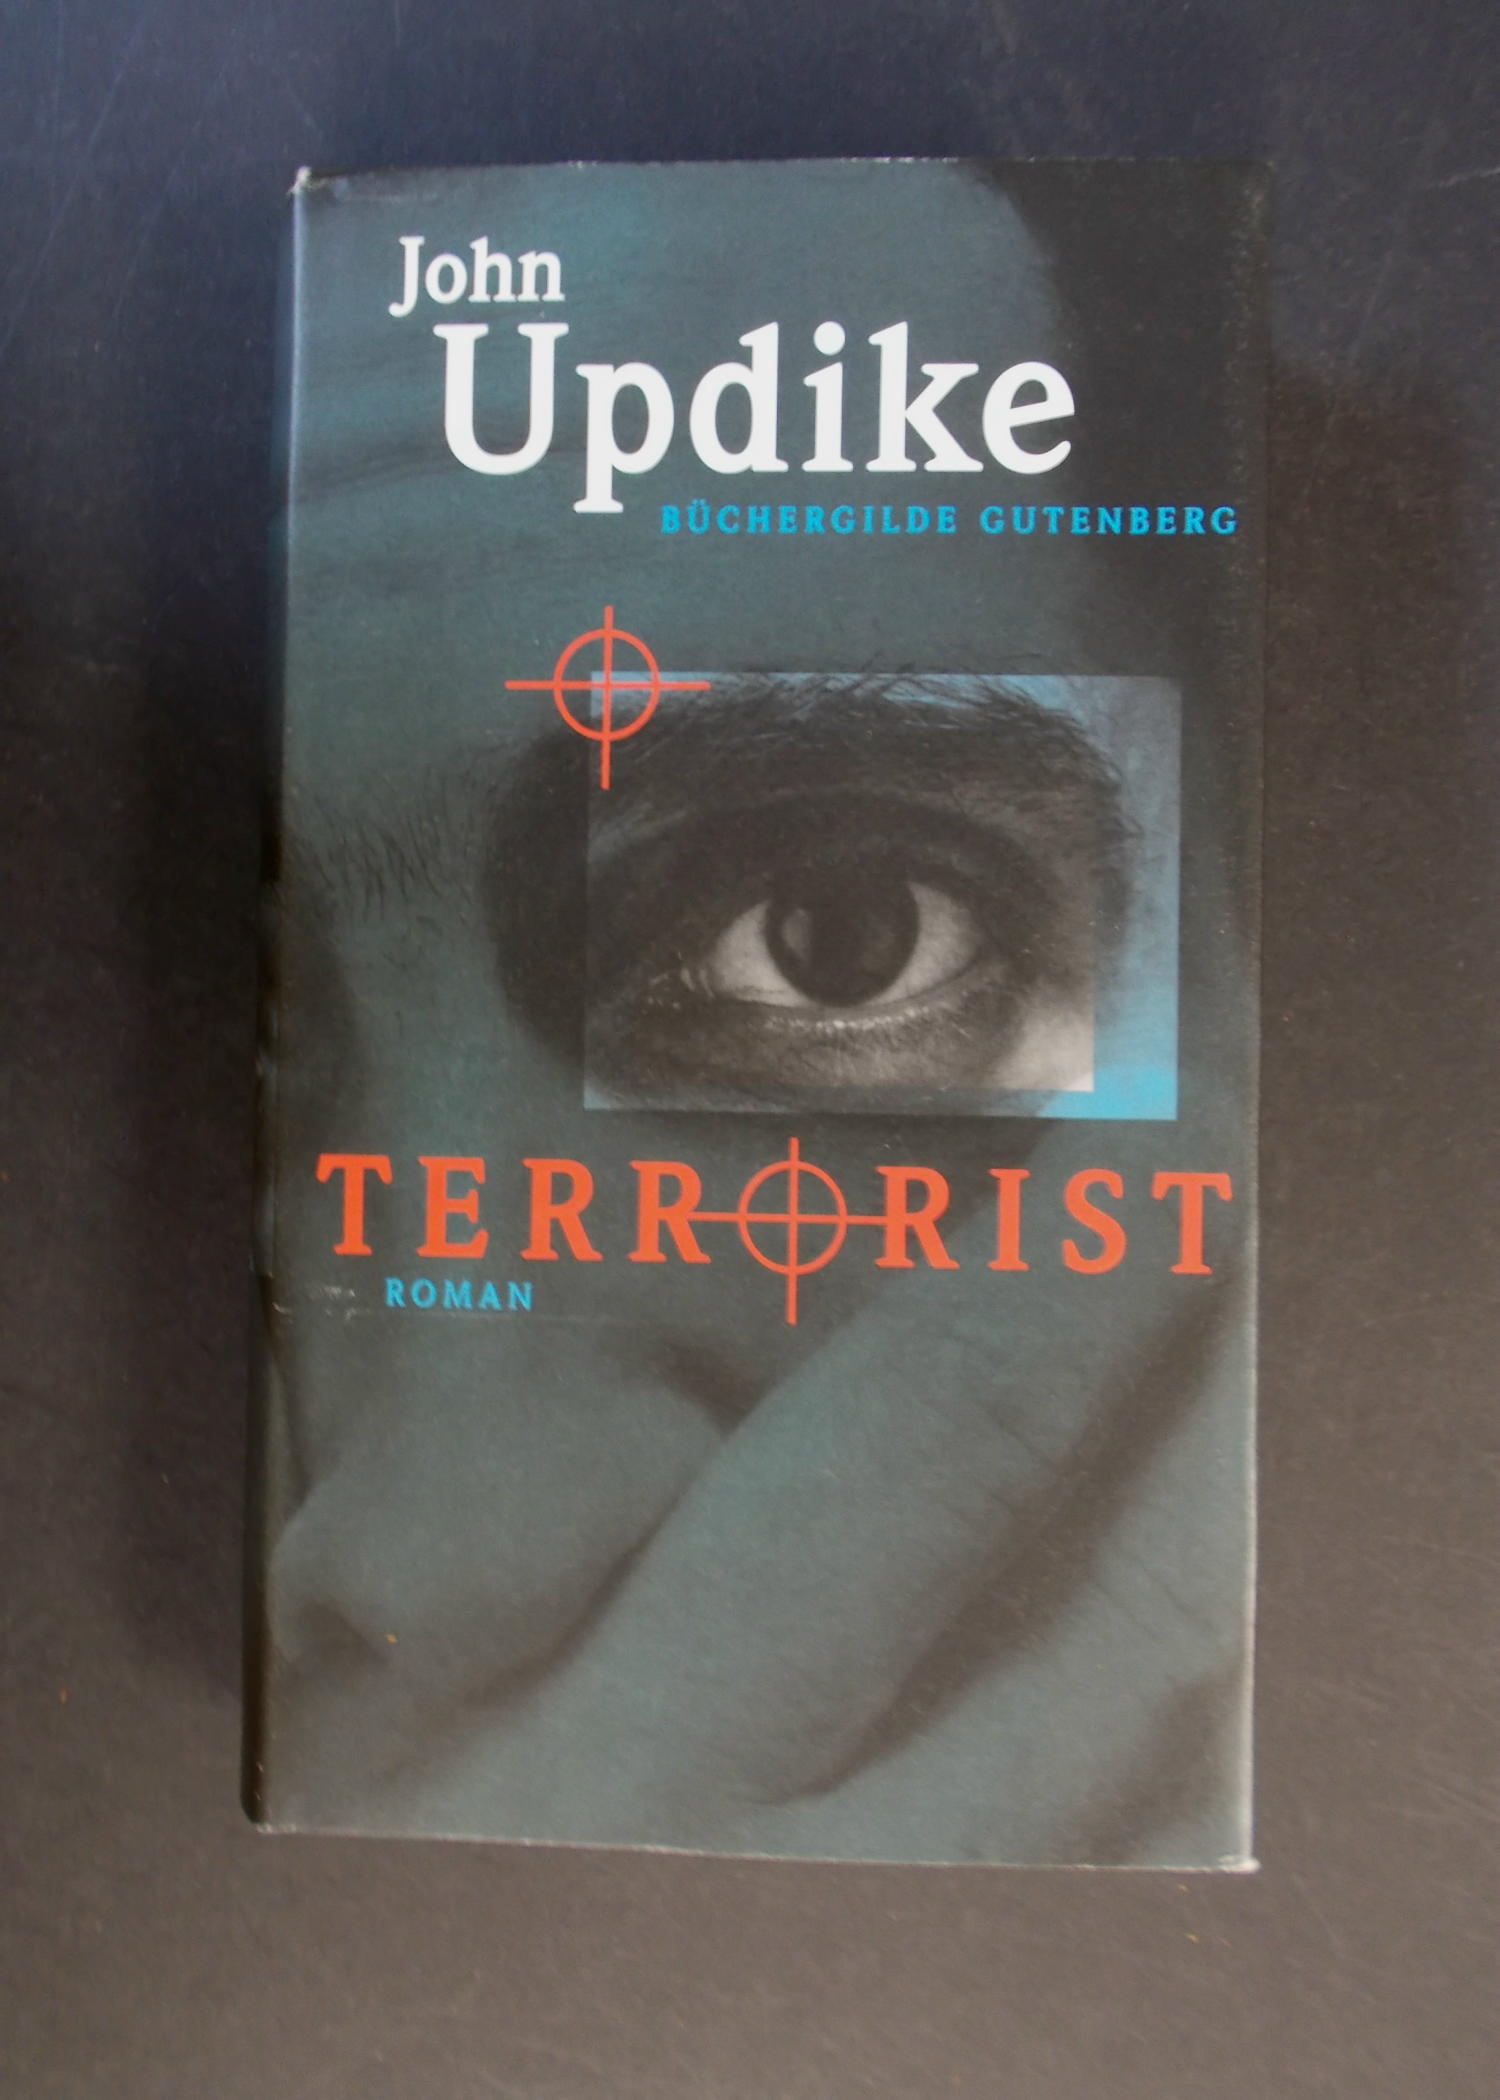 Terrorist - Updike, John